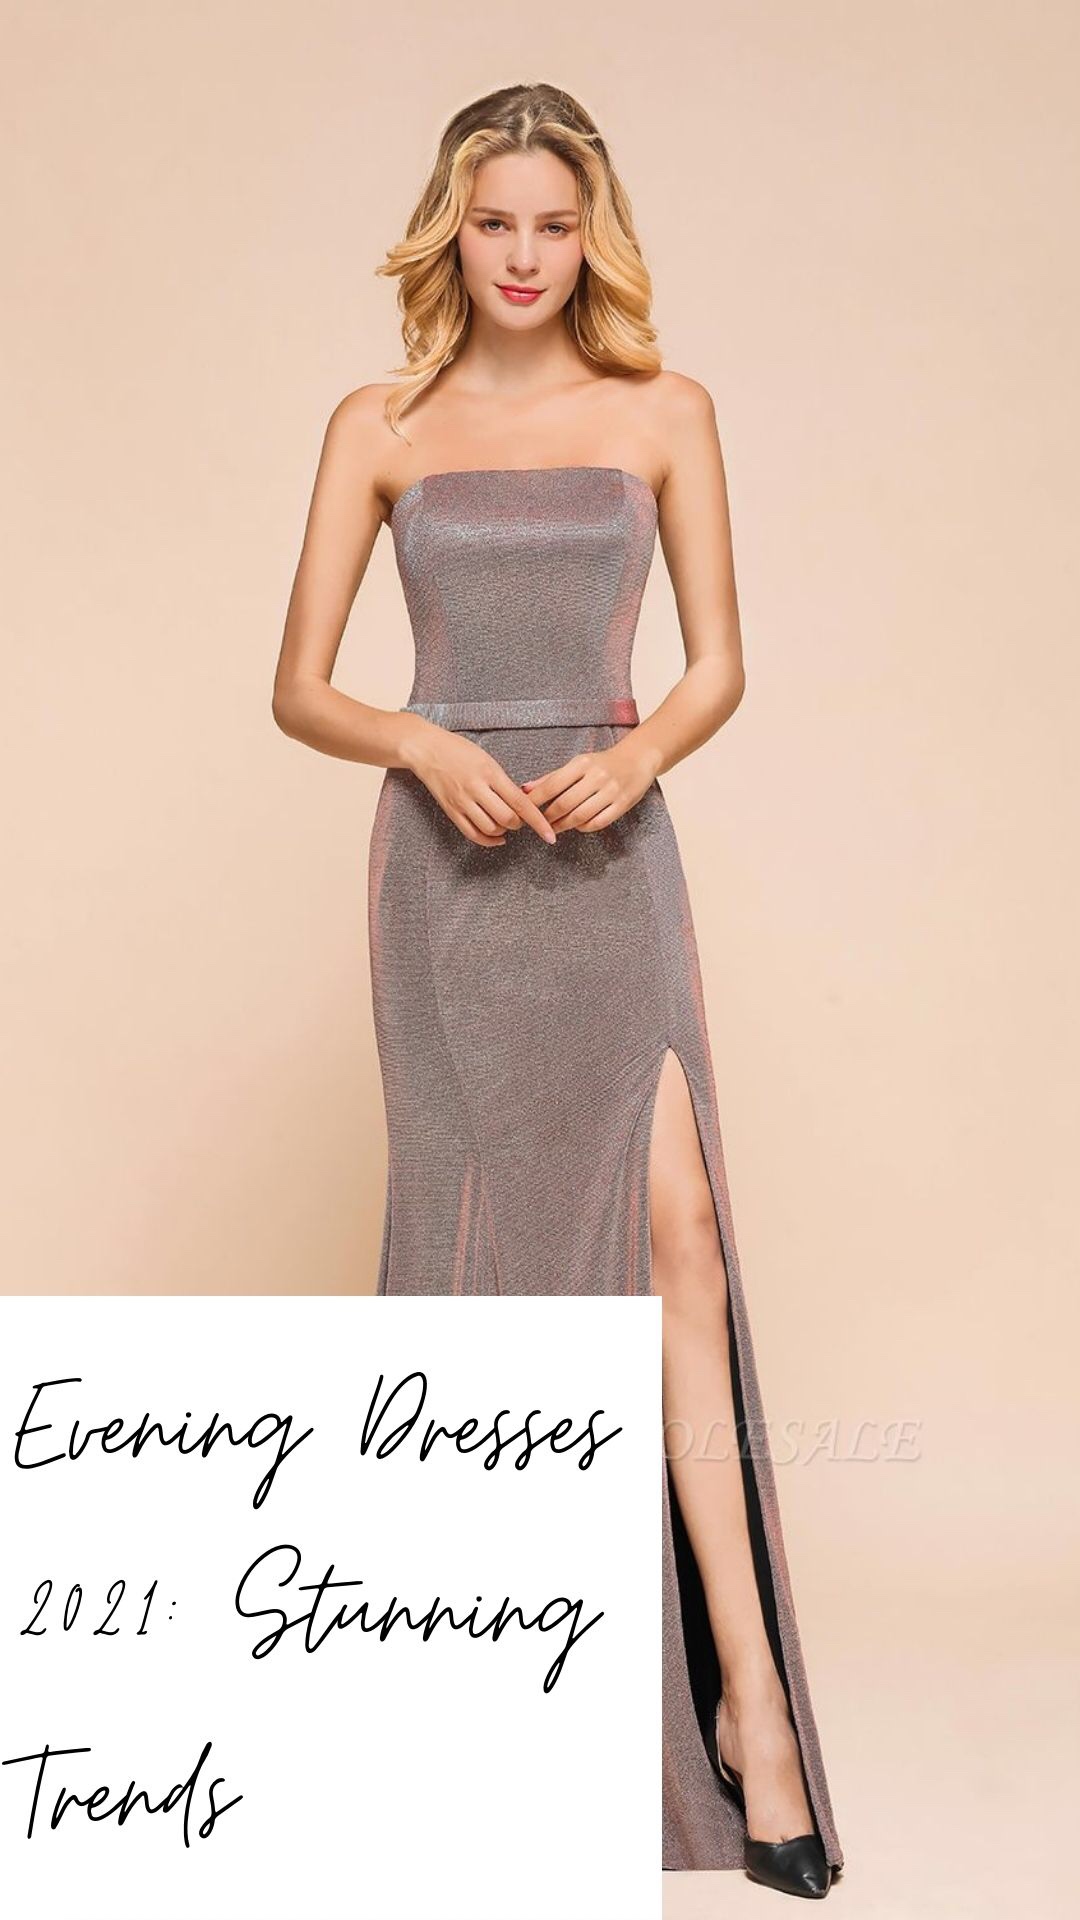 Evening Dresses 2021: Stunning Trends -